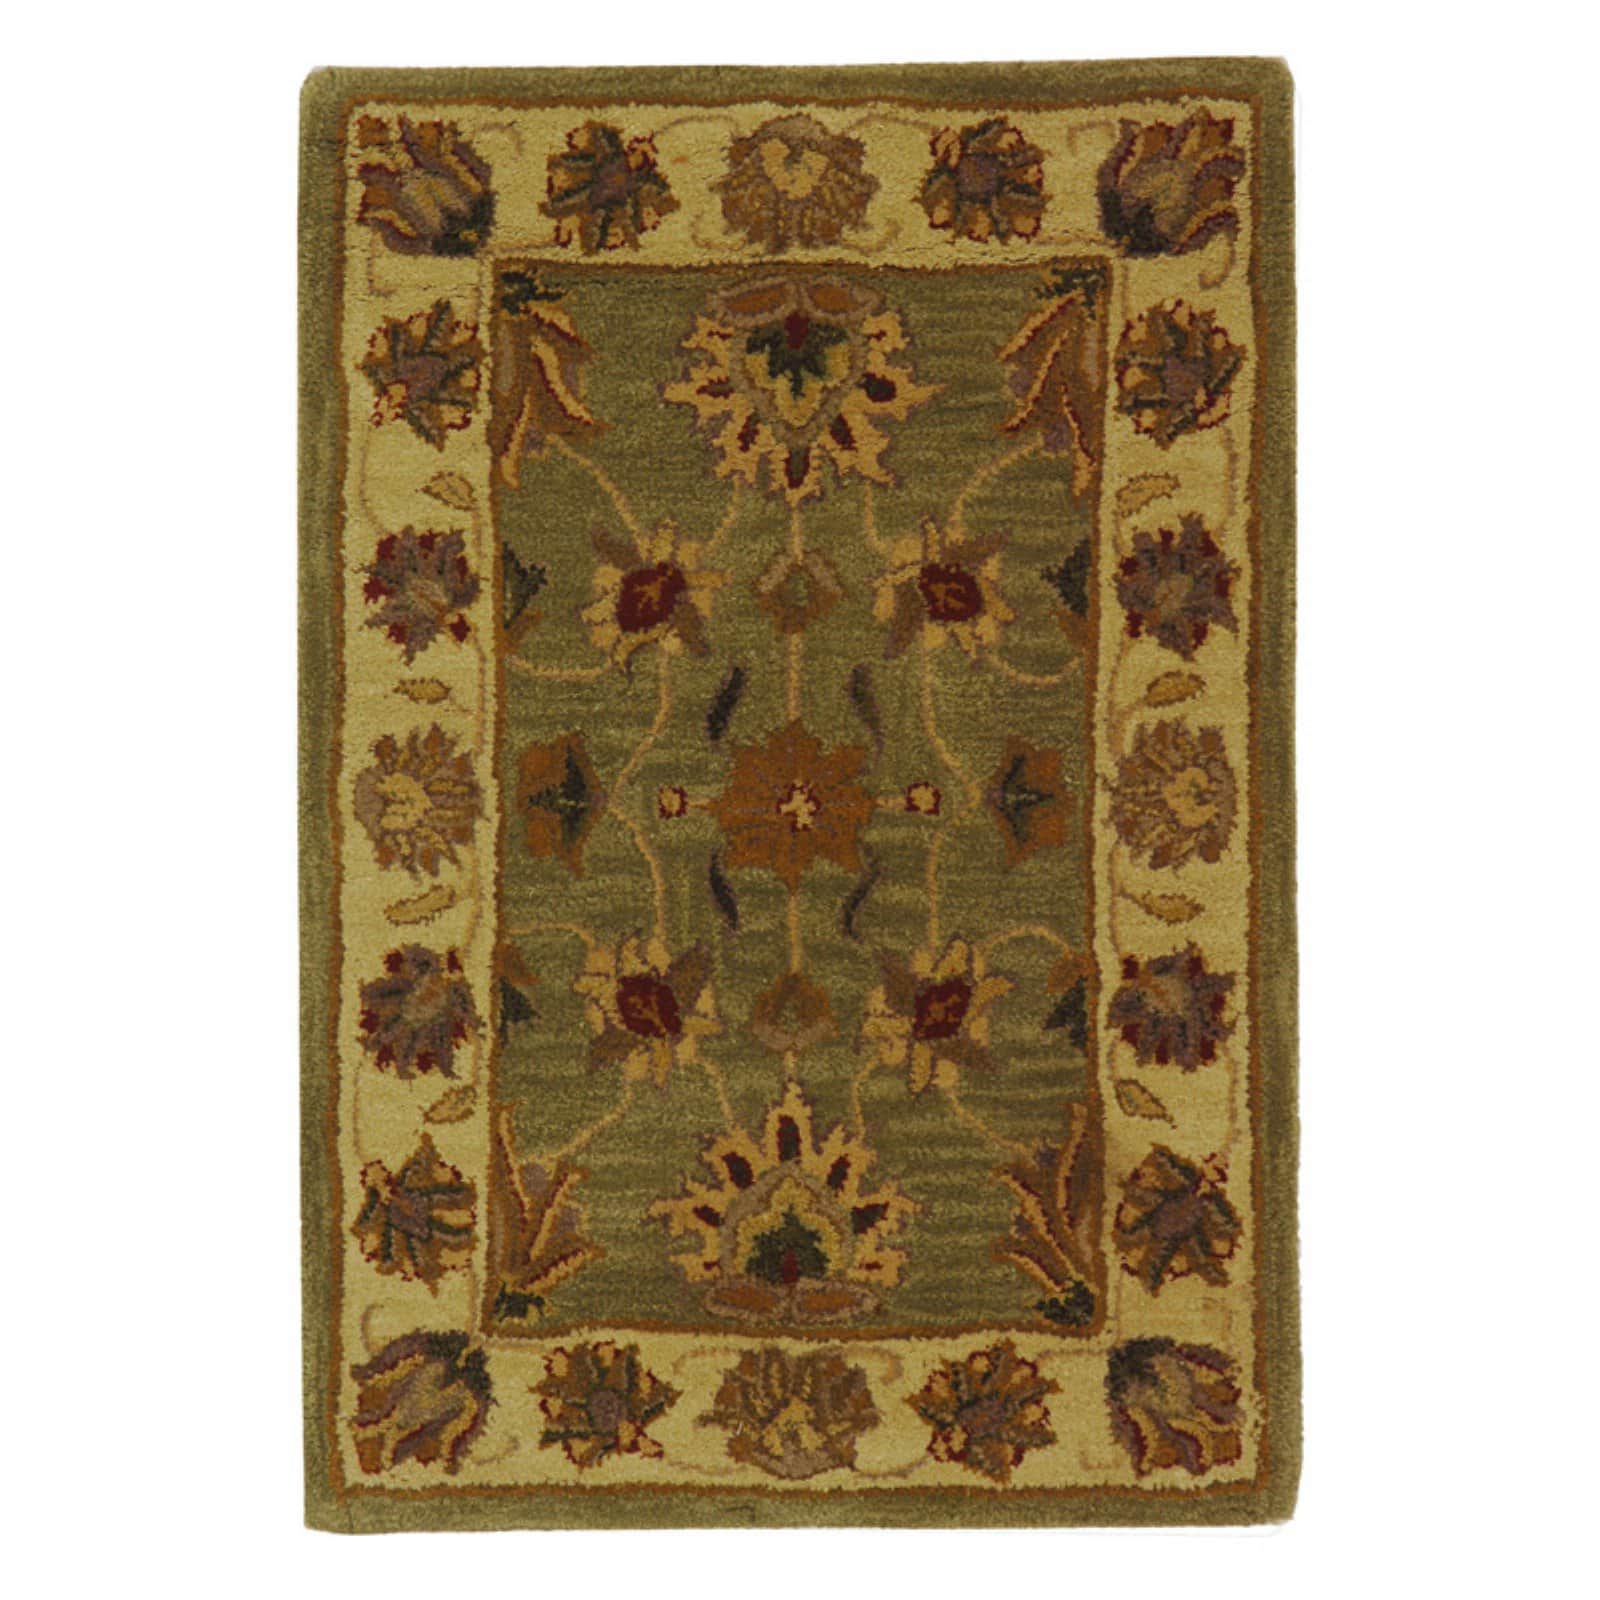 SAFAVIEH Heritage Regis Traditional Wool Area Rug, Green/Gold, 8'3" x 11' - image 2 of 10